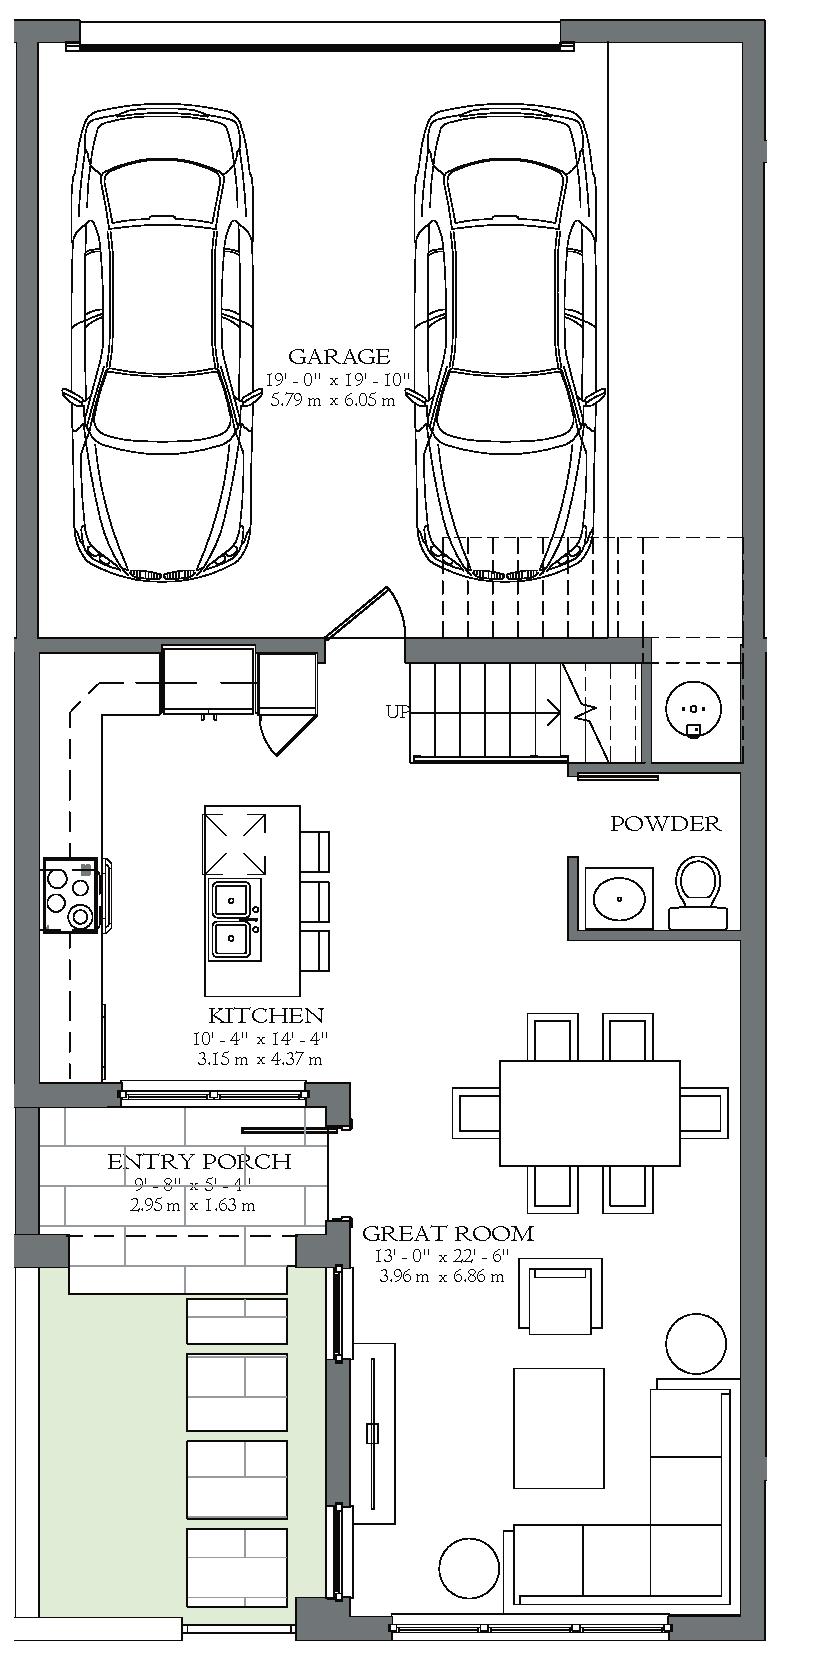 MODEL C Two-Story 3 bedrooms, 2.5 bathrooms, 2-car garage at rear. 1,829 AC SF» 169.91 M 2 2,465 TOTAL SF» 228.